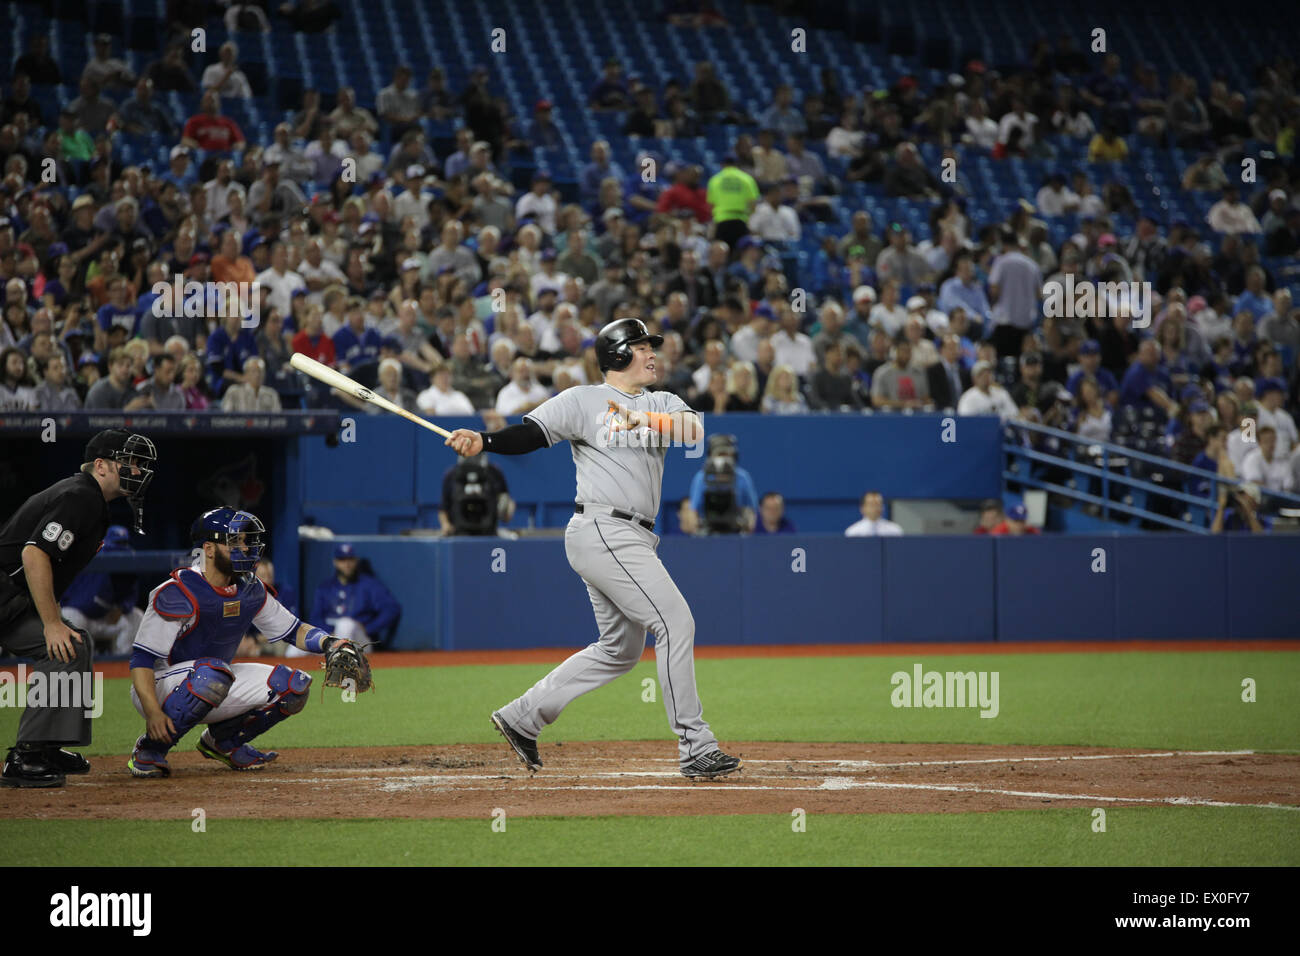 MLB baseball player swinging bat Stock Photo